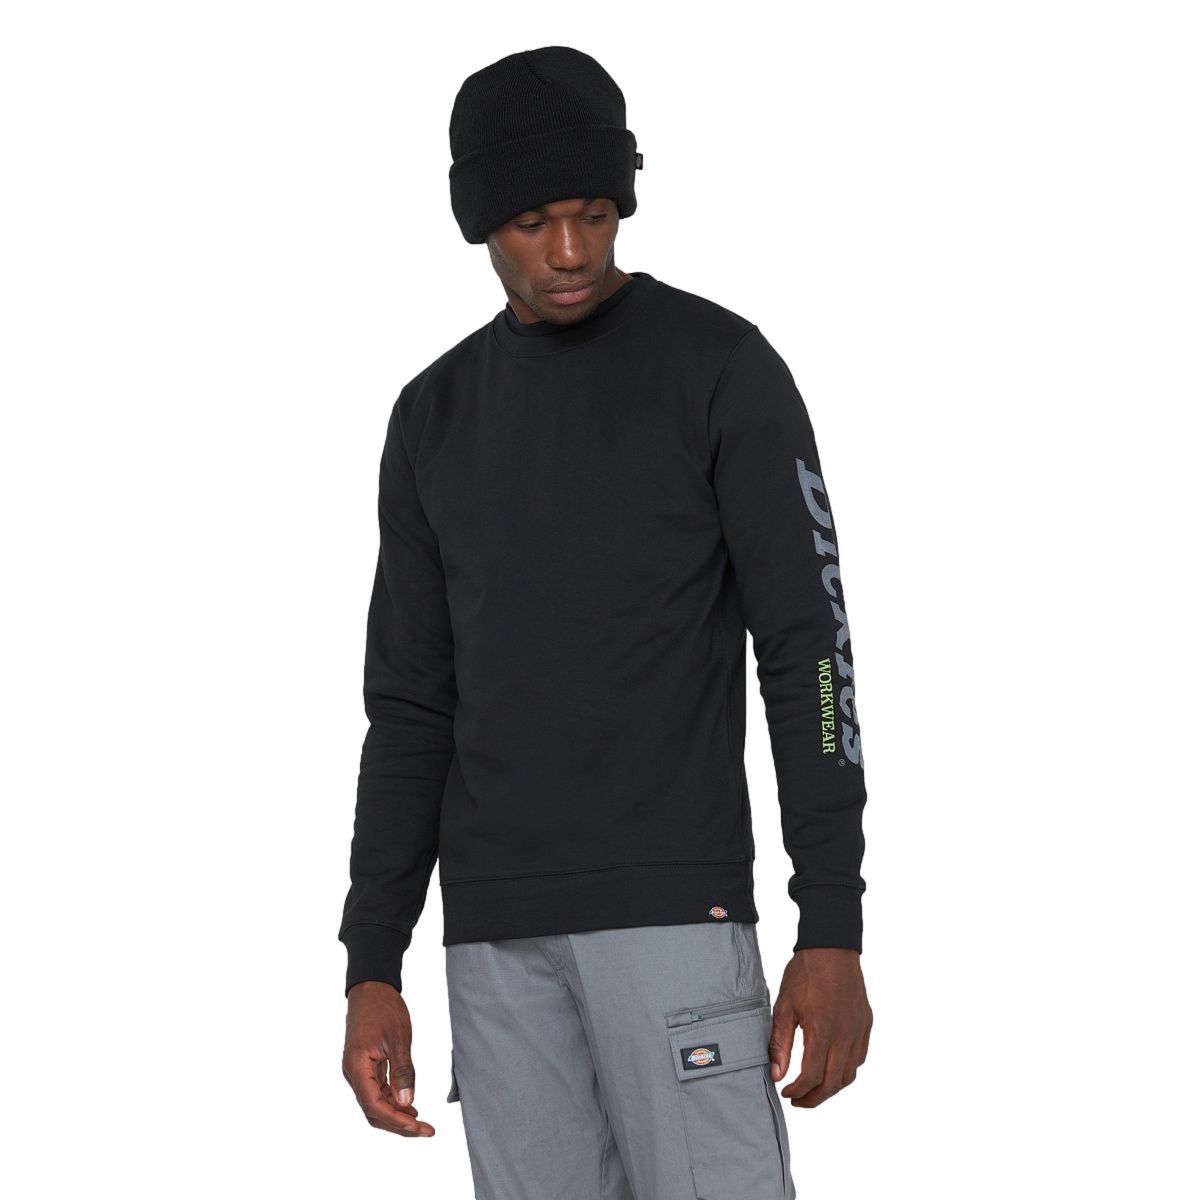 Sweat-shirt imprimé Okemo Noir - Dickies - Taille XL 2